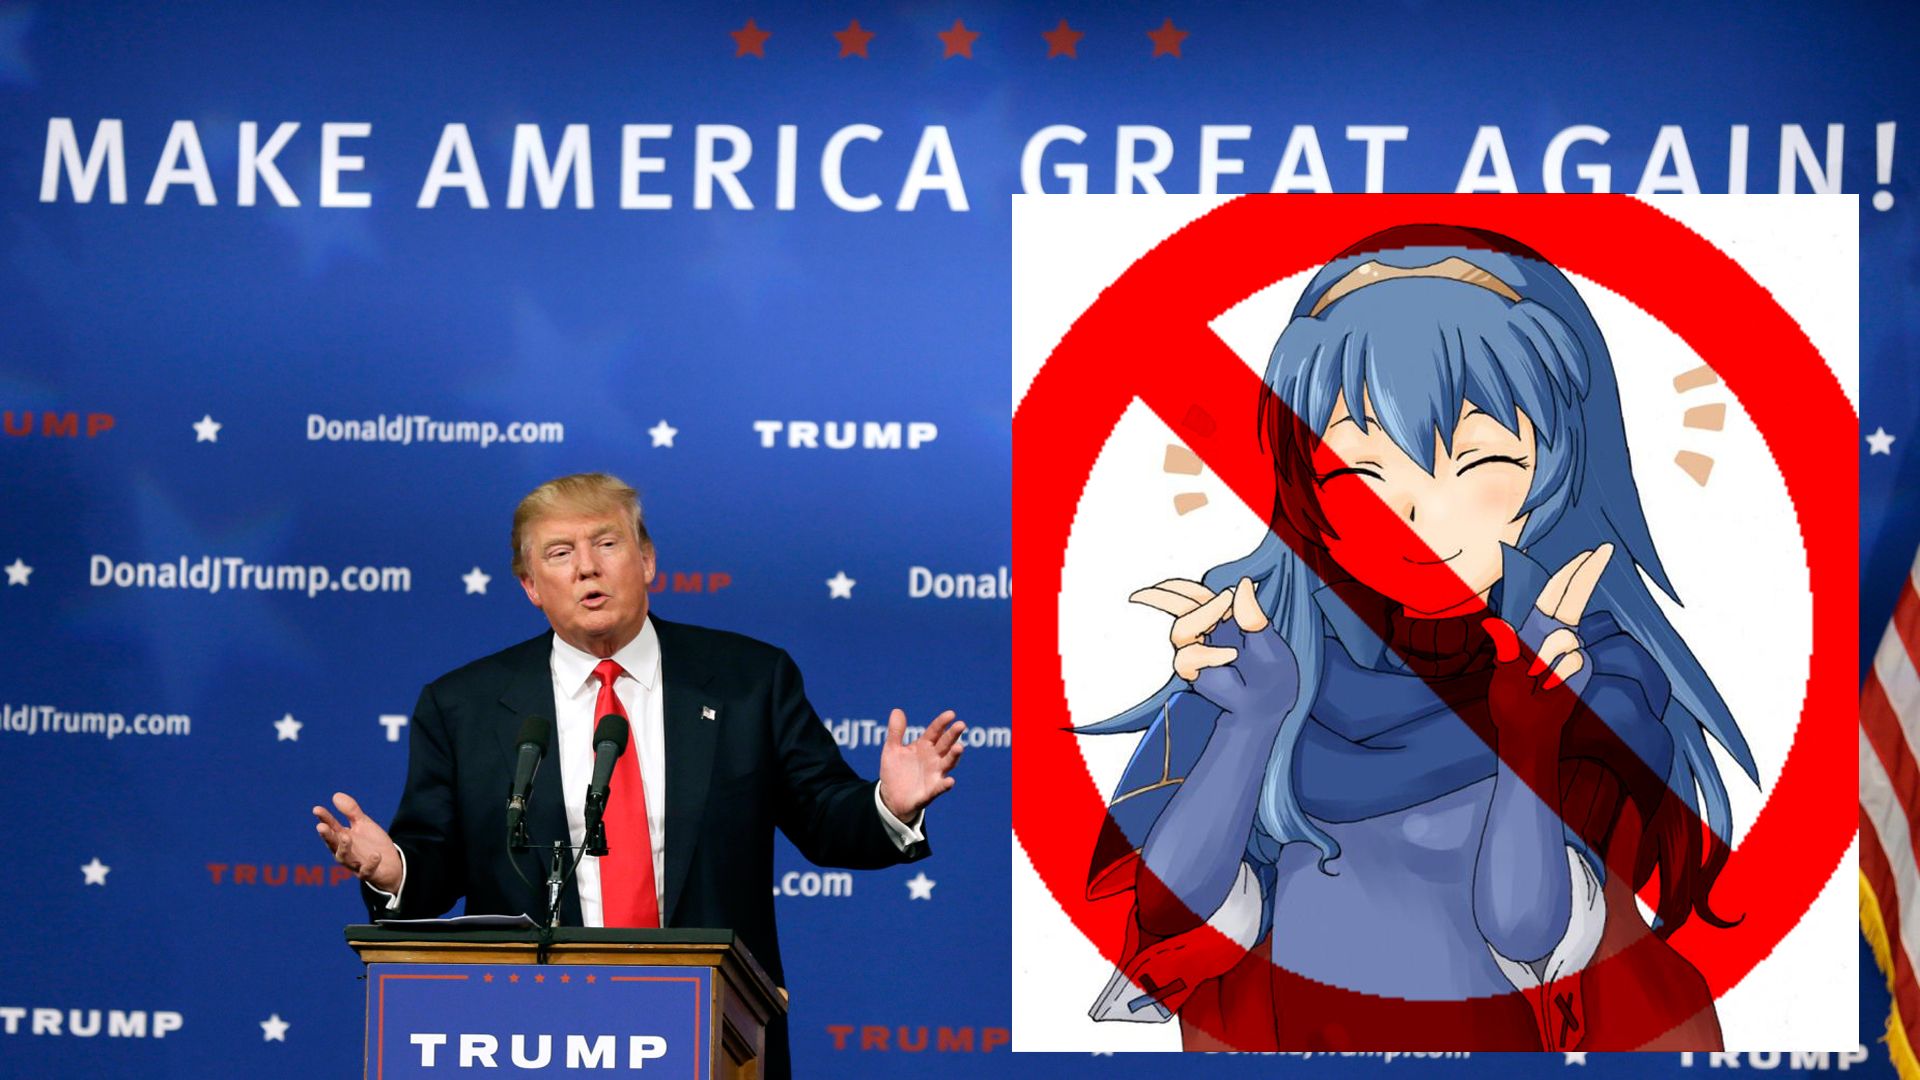 Nintendo, Sony Stocks Plummet As President Trump Issues Ban On Anime